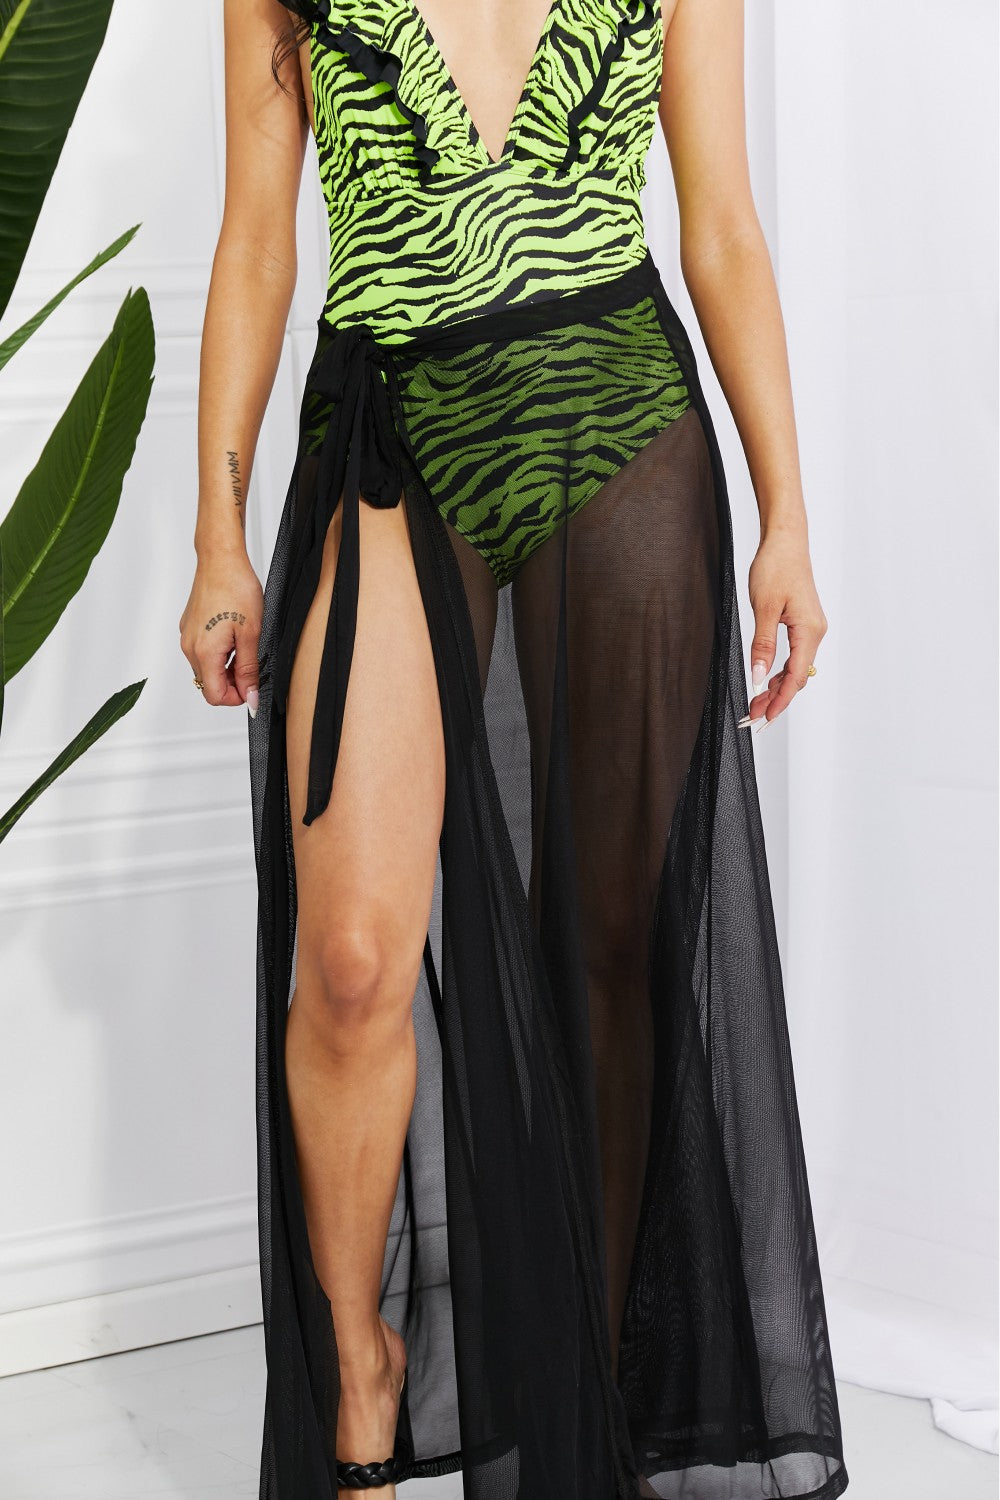 Marina West Swim Beach Is My Runway Mesh Wrap Maxi Cover-Up Skirt - The Fashion Unicorn